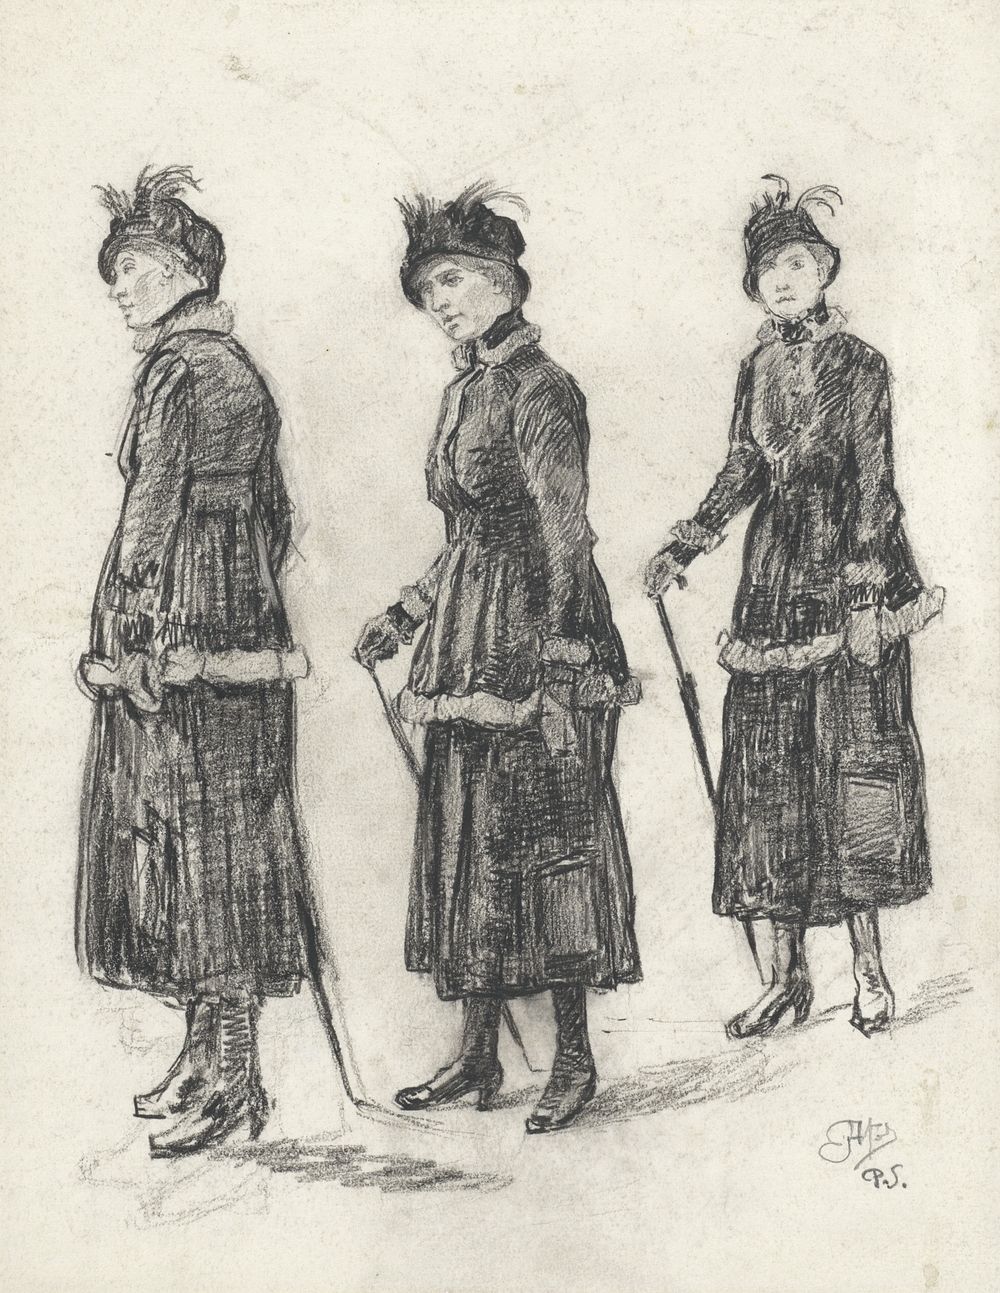 Drie studies van een wandelende dame in mantelkostuum (1869 - 1941) by Johannes Abraham Mondt and George Henry Boughton